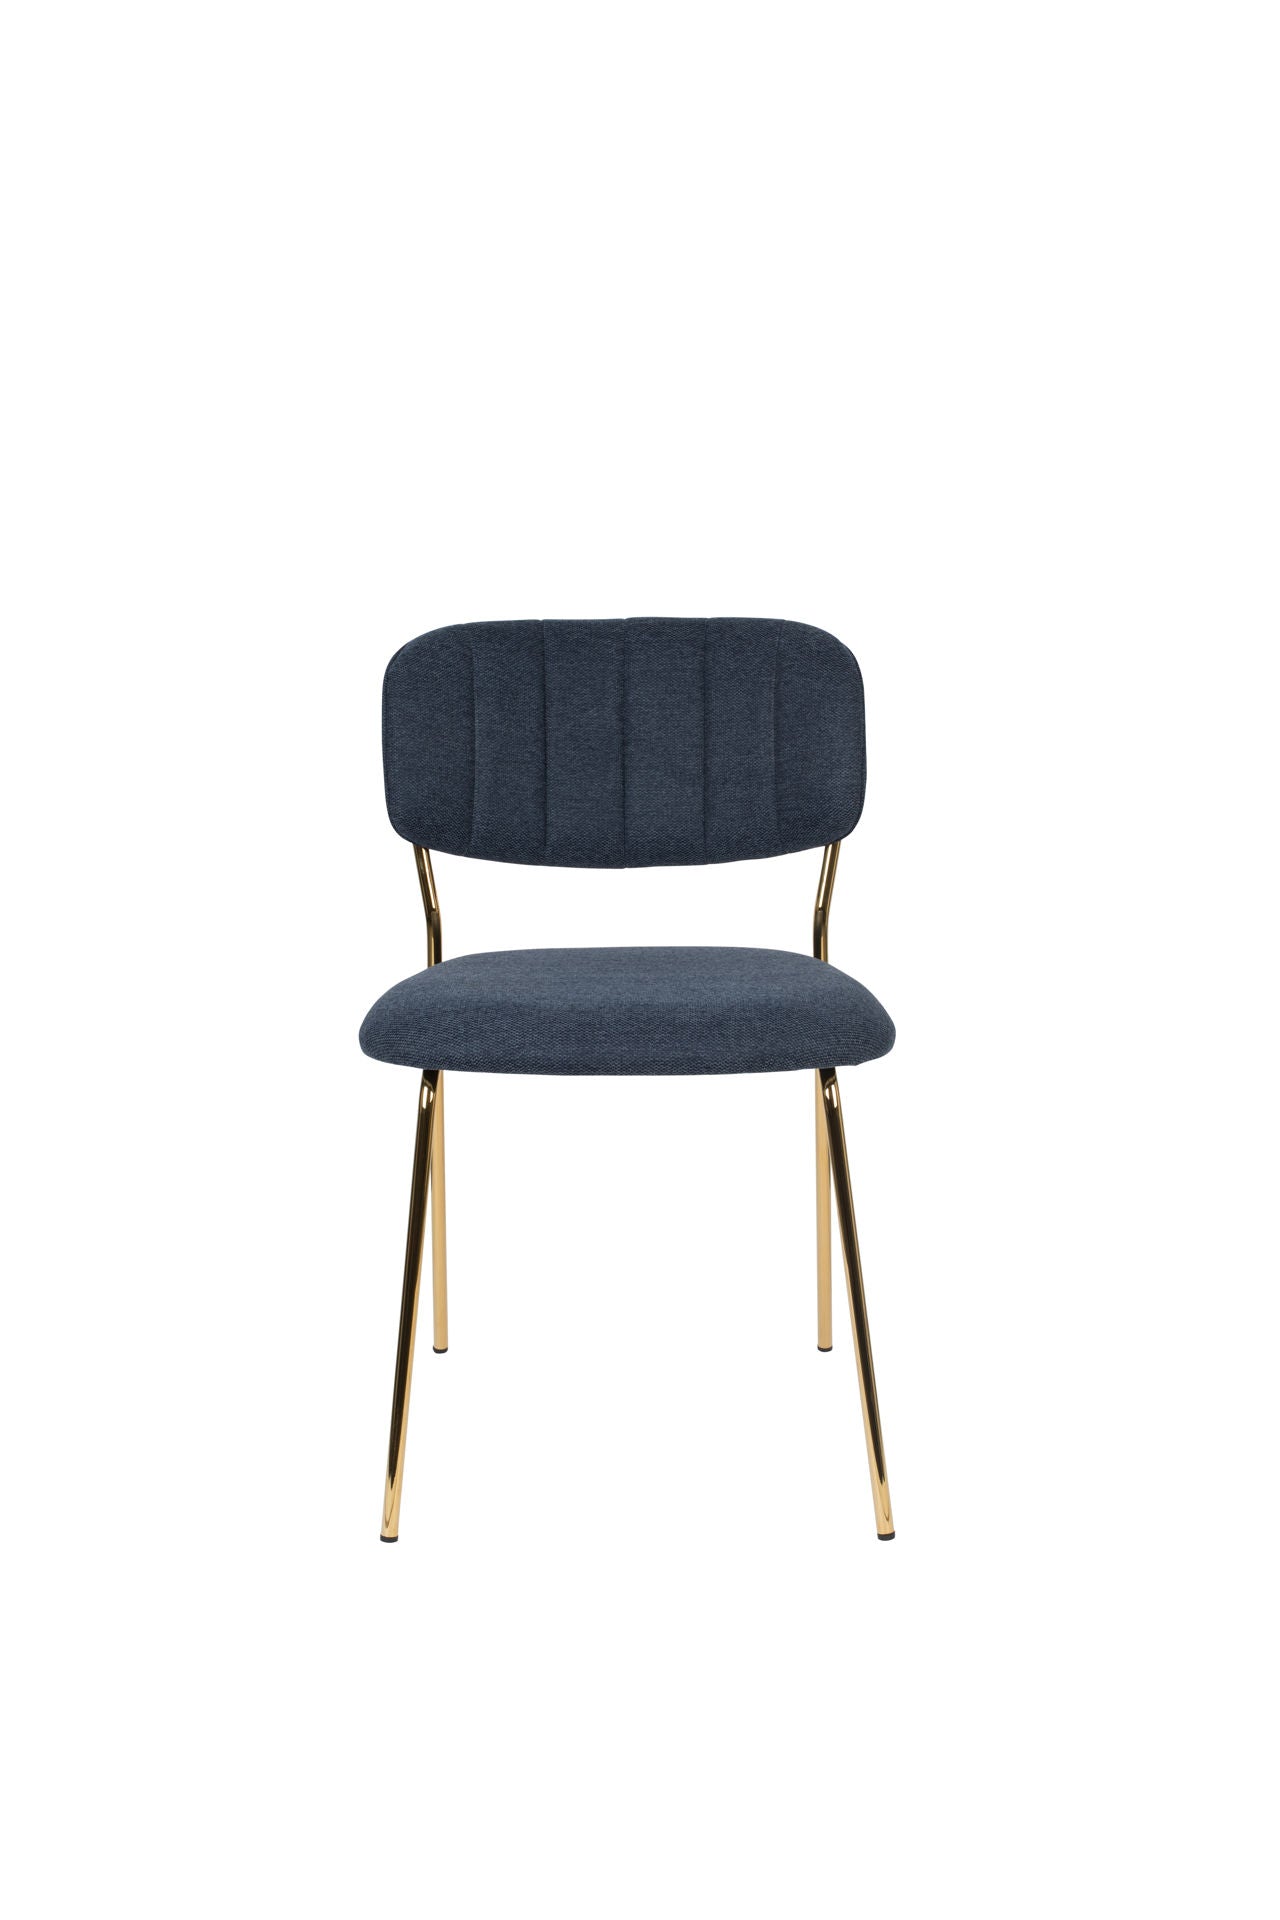 Nancy's Kings Grant Chair - Retro - Gold, Blue - Polyester, Steel, Plywood - 56 cm x 49 cm x 78 cm